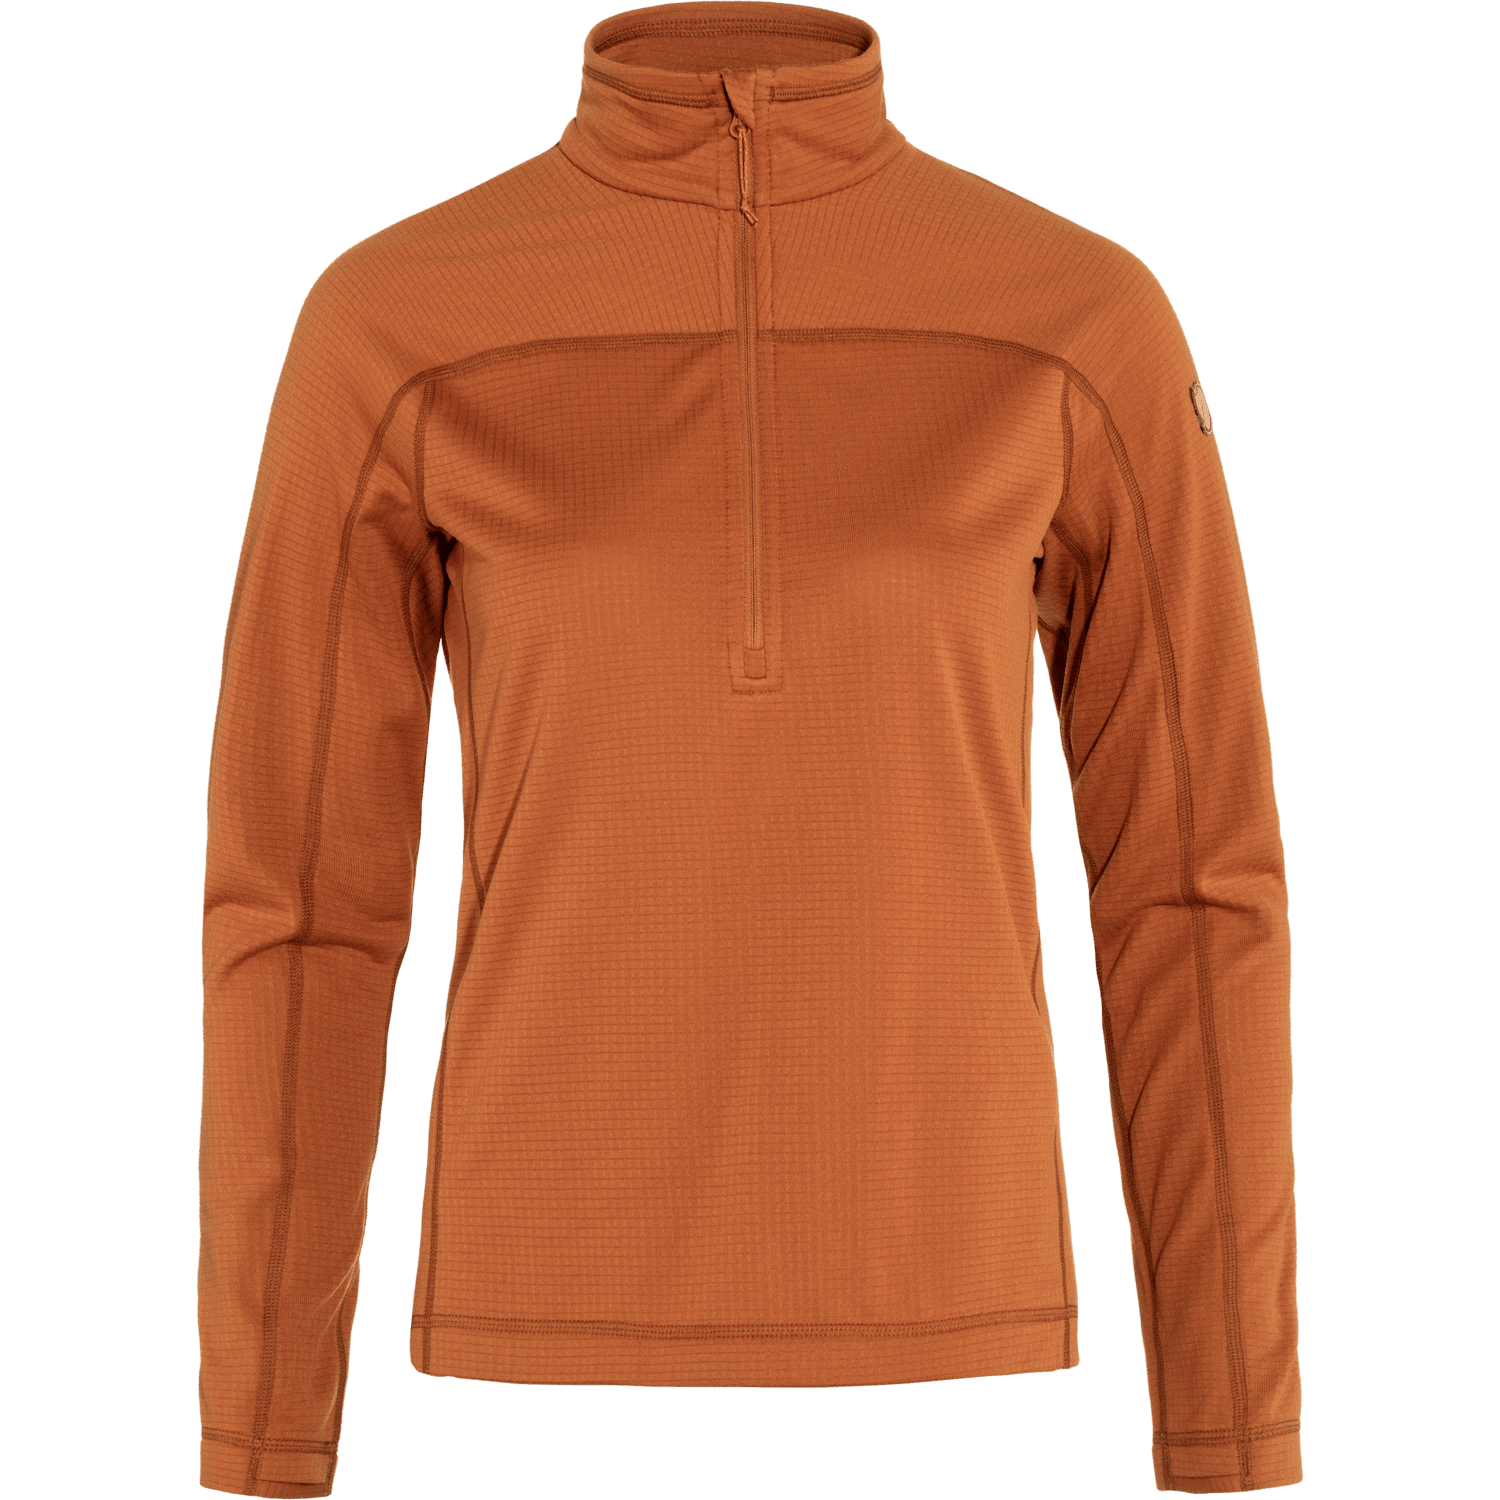 Fjällräven - W's Abisko Lite Fleece Half Zip - 100% Recycled polyester - Weekendbee - sustainable sportswear